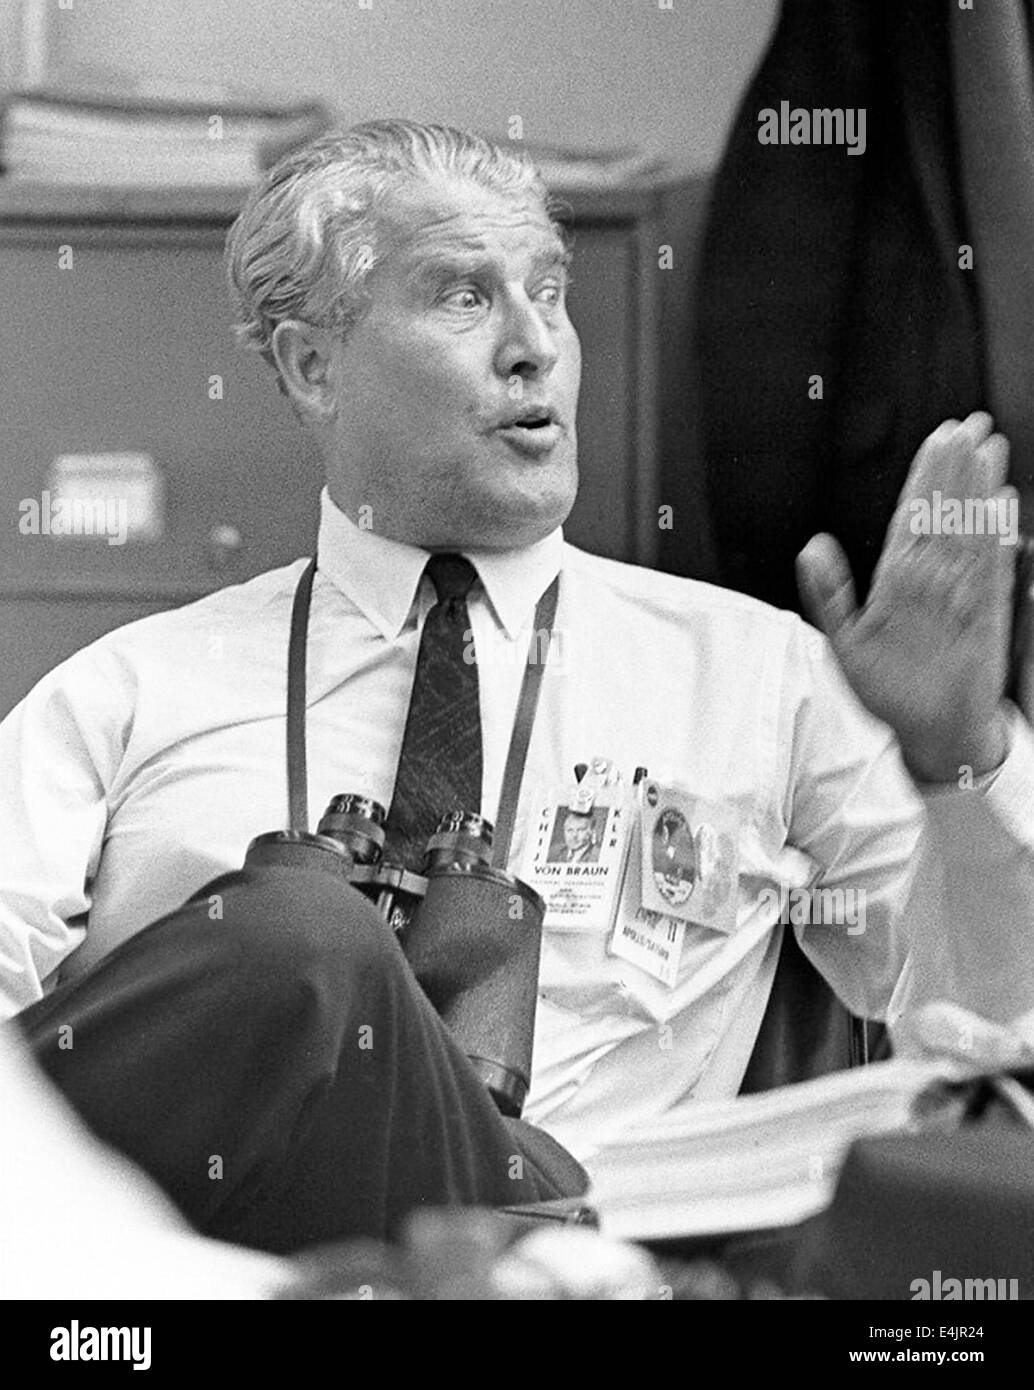 Werner von Braun lors du lancement d'Apollo 11 Banque D'Images